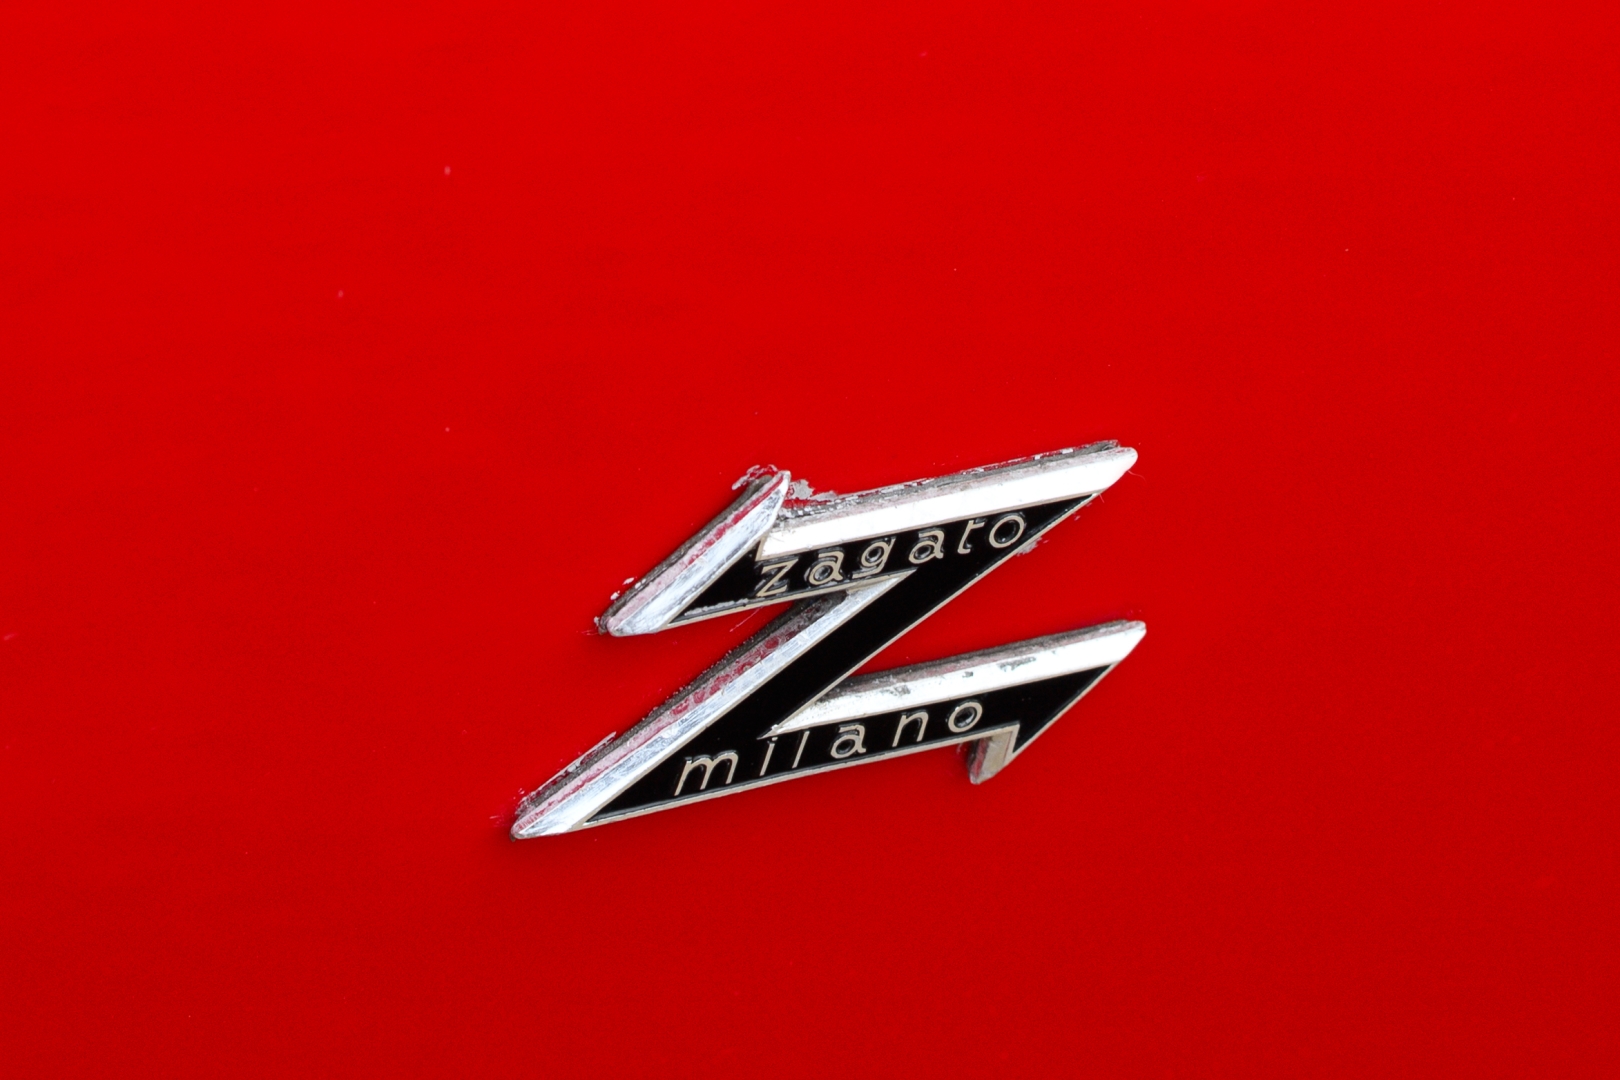 Zagato badge